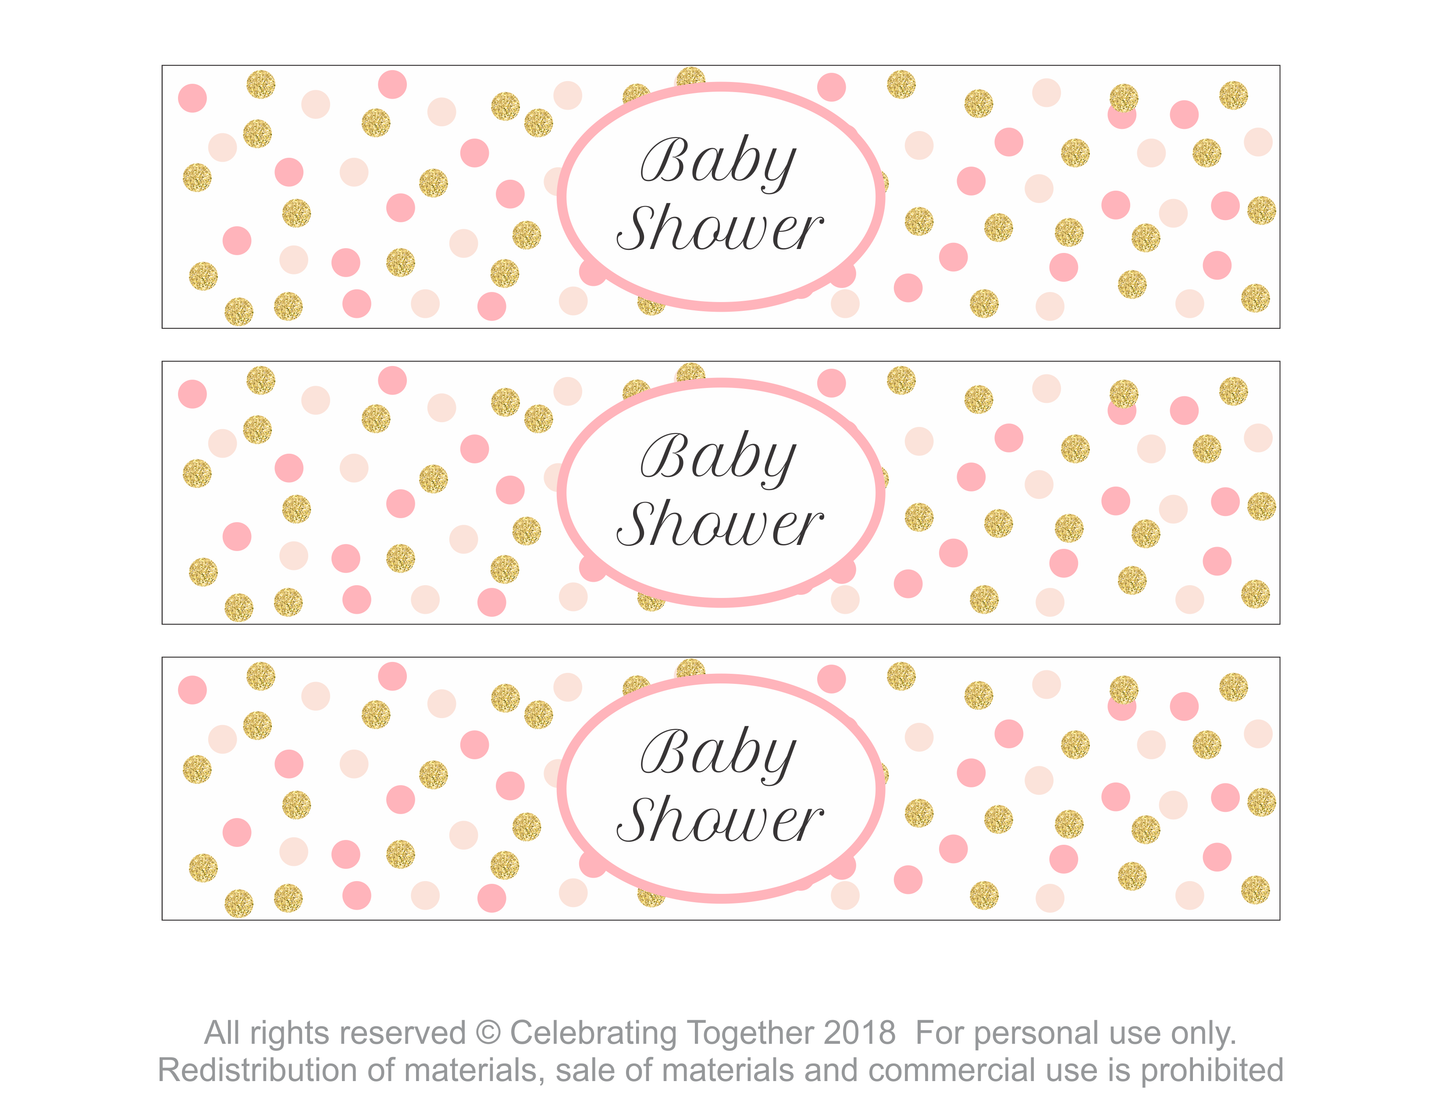 page of printable baby shower drink bottle wraps - Celebrating Together